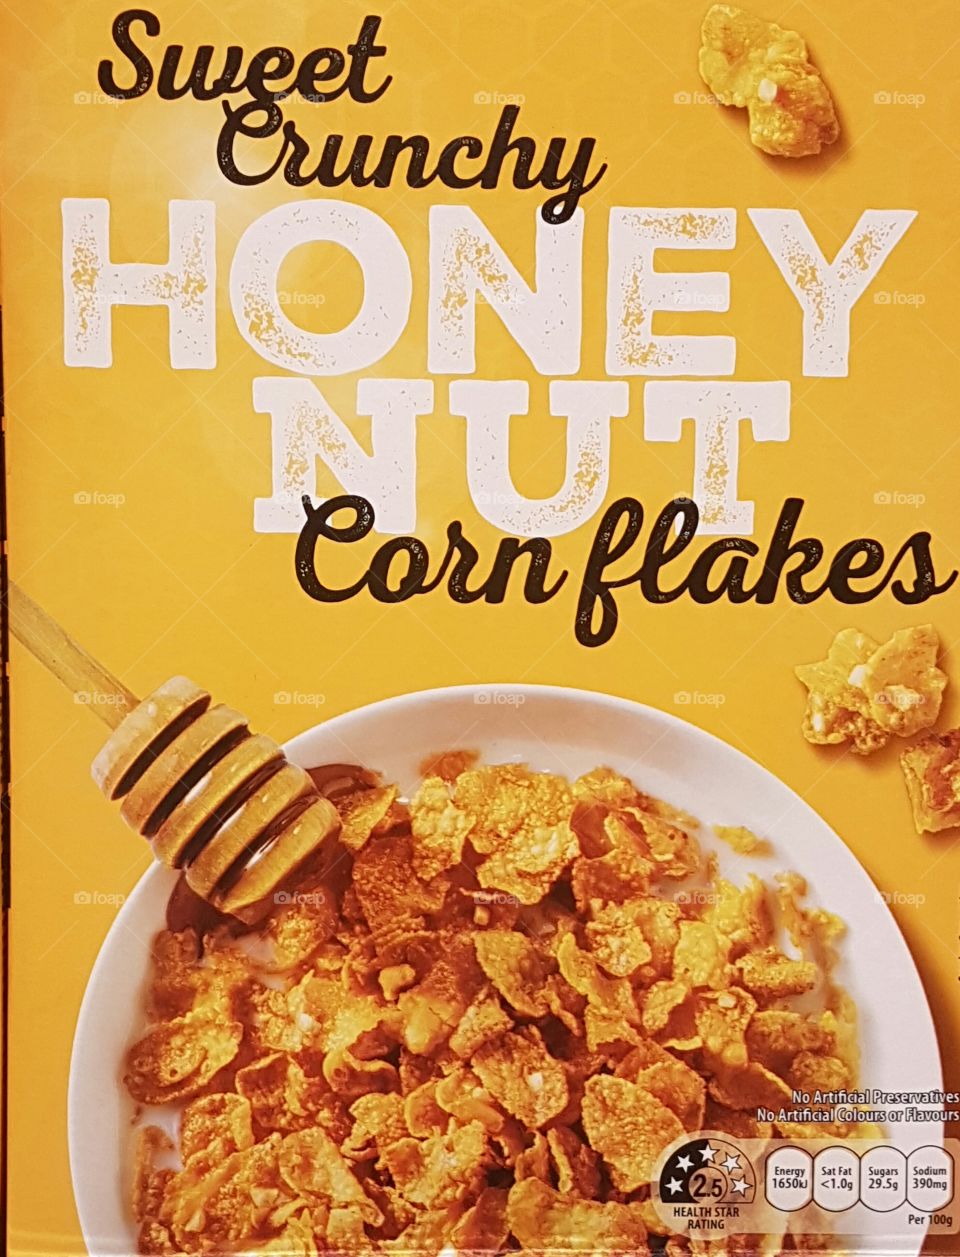 corn flakes box at the supermarket